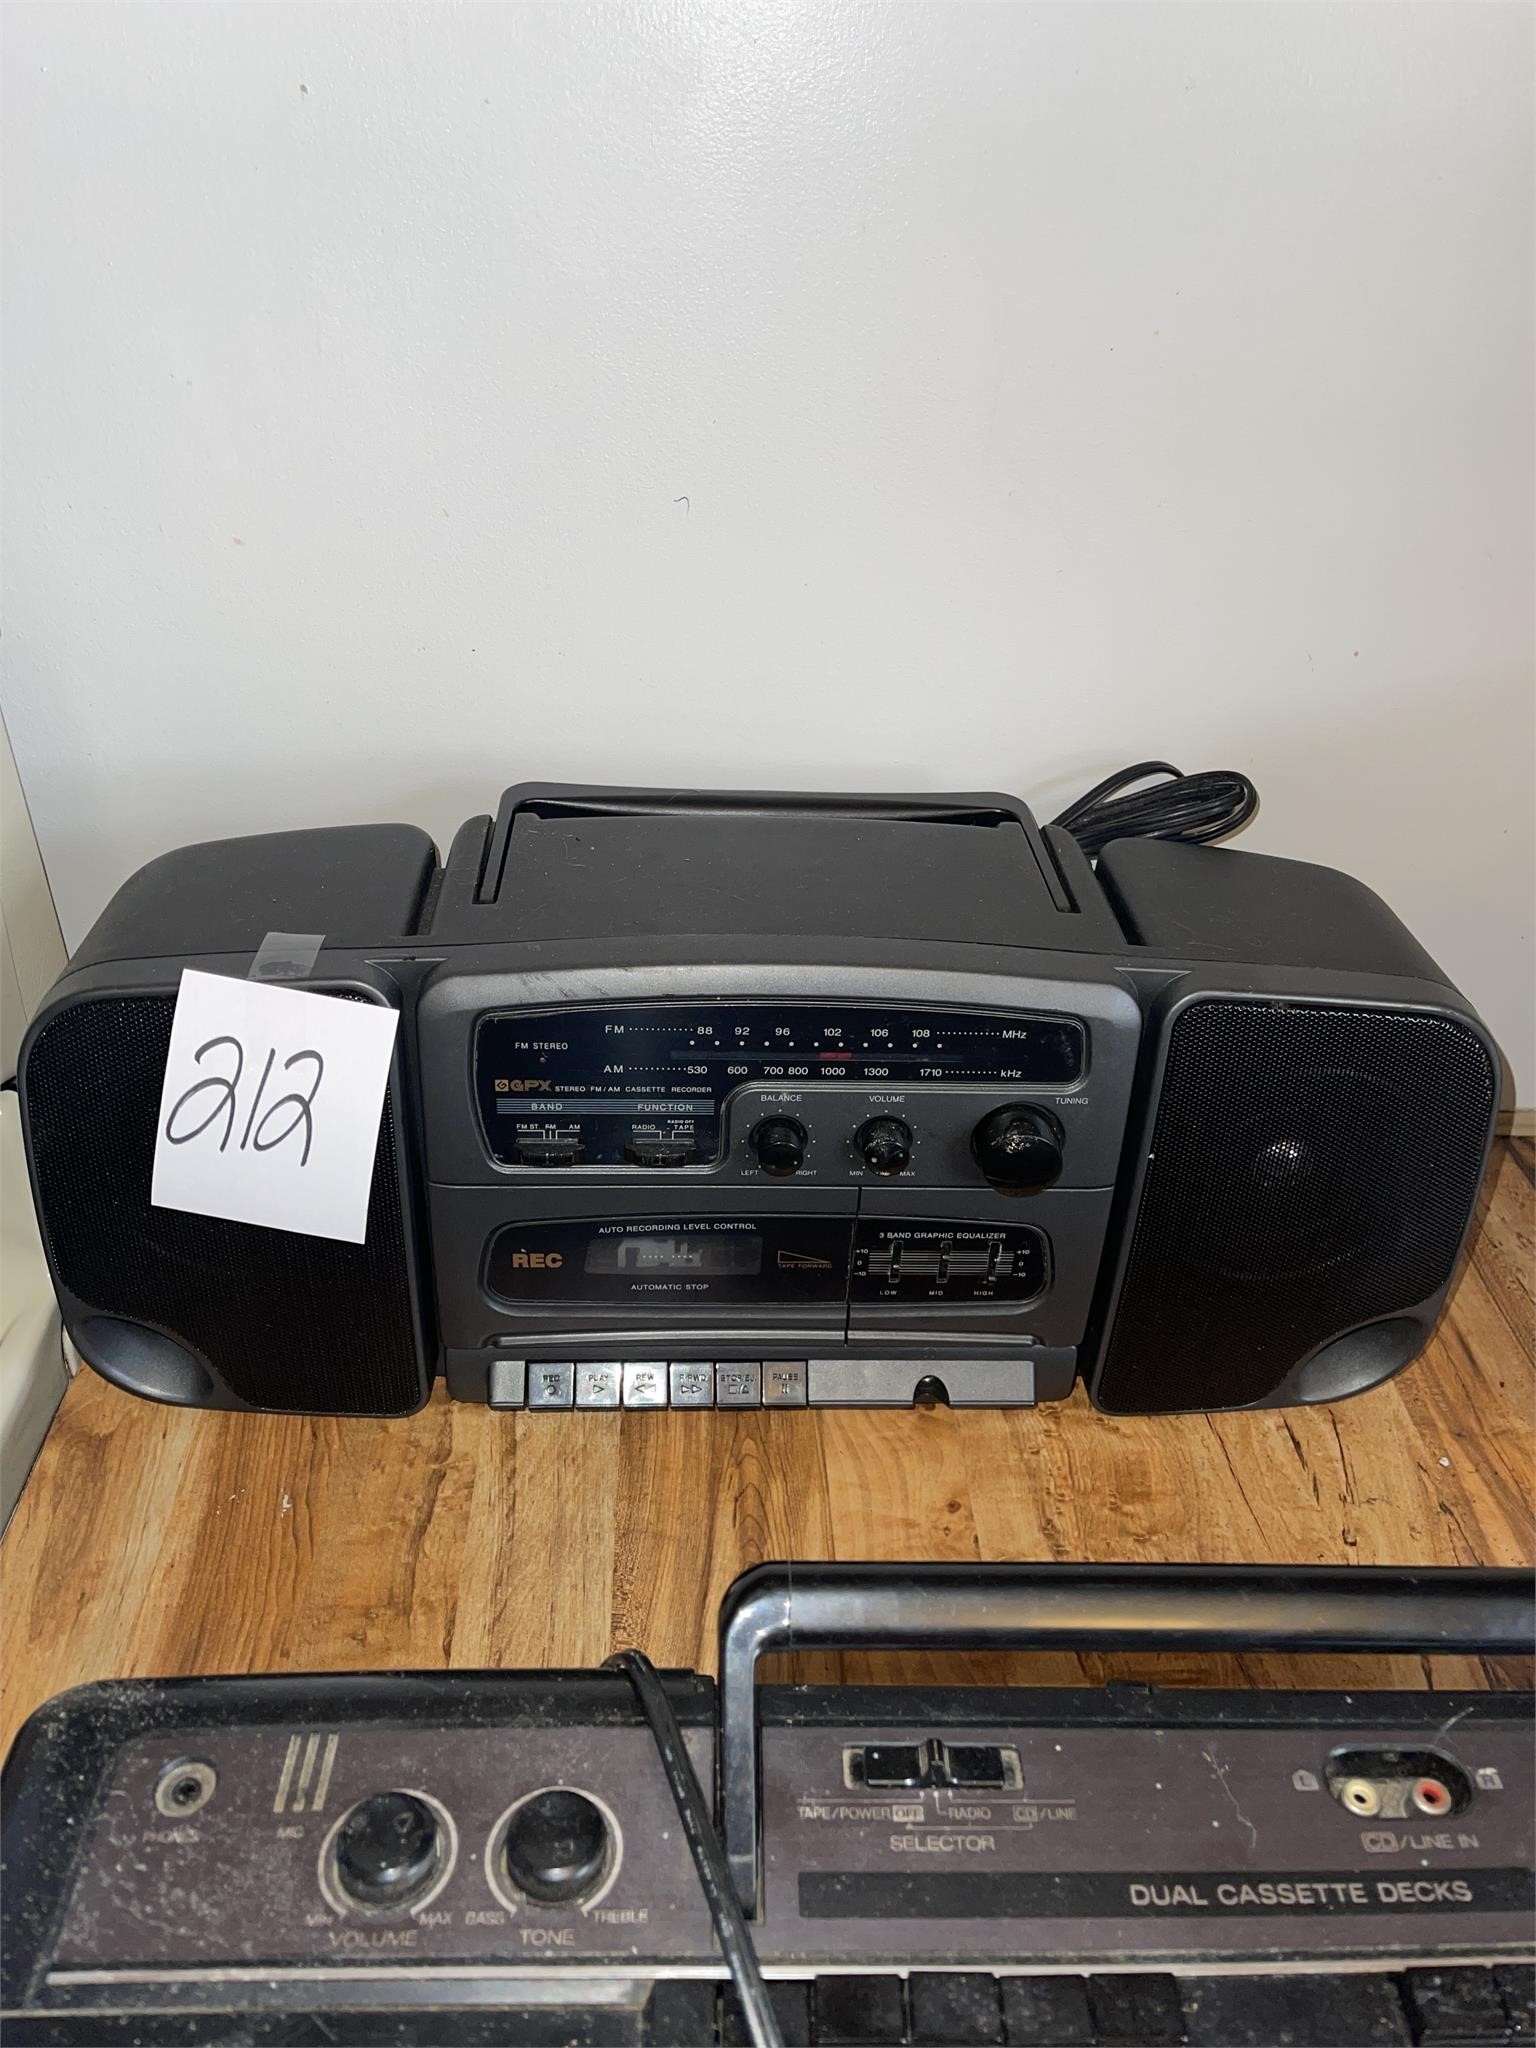 GPX cassette boom box radio